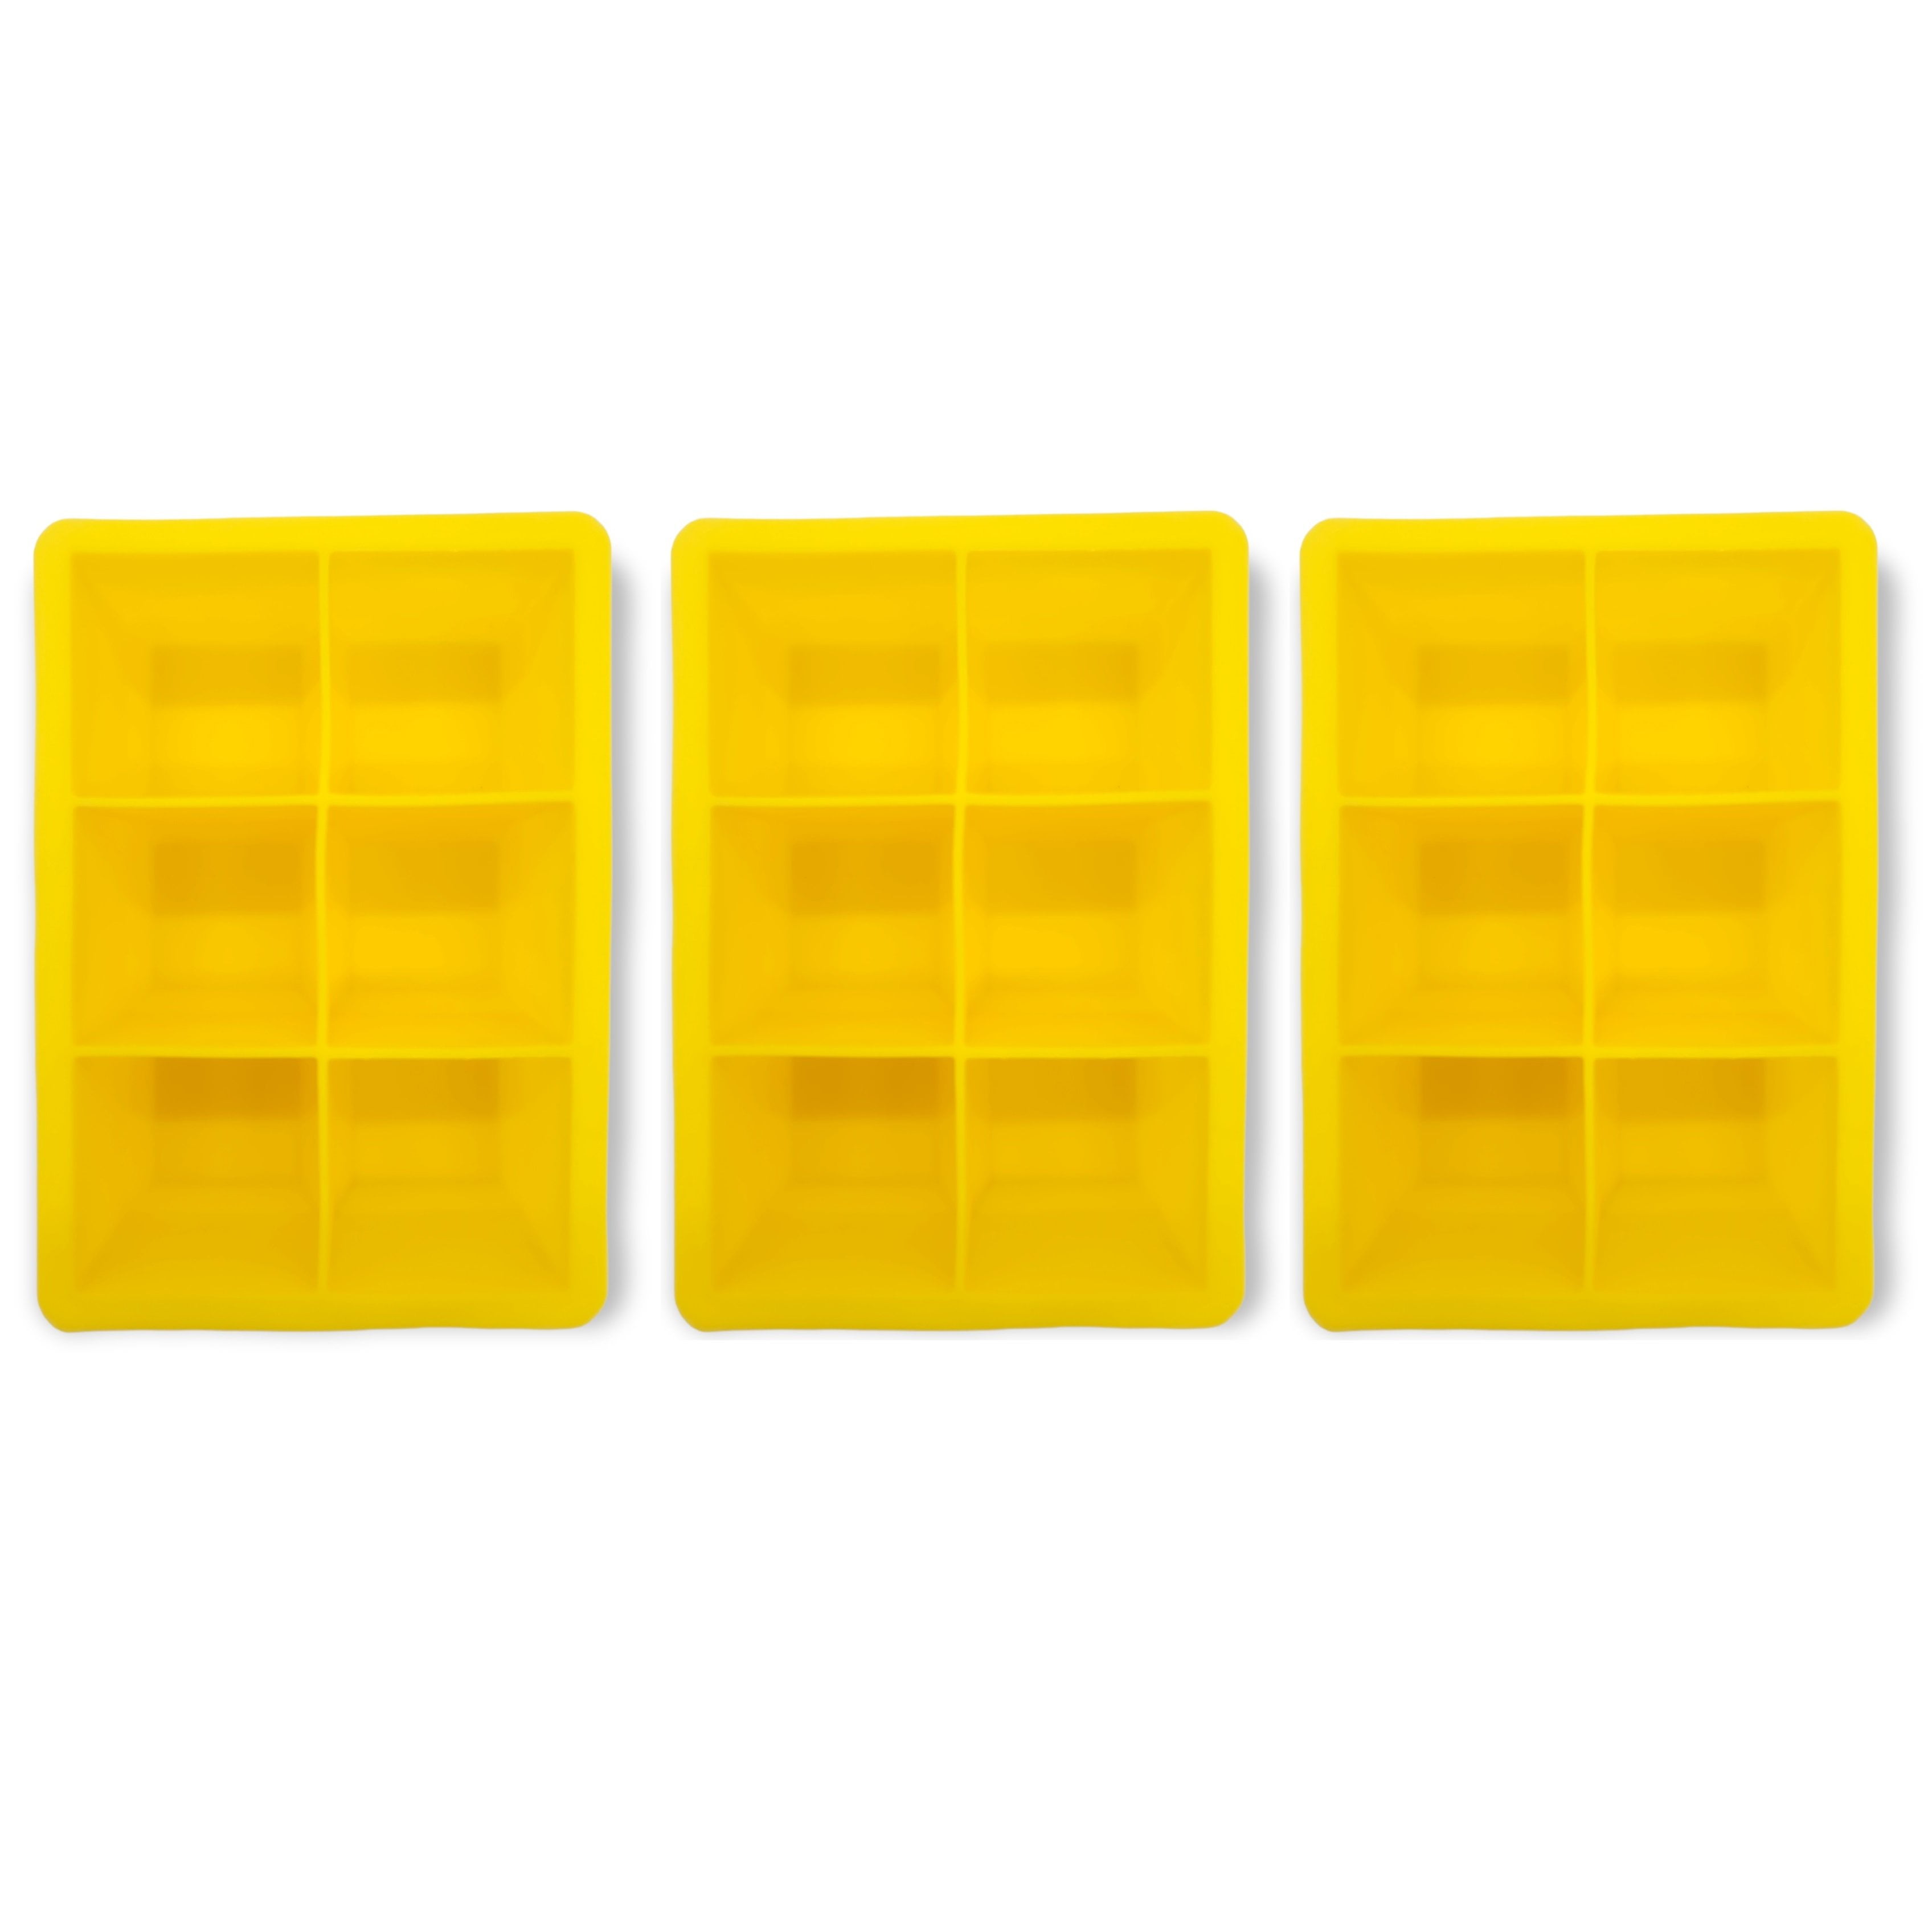 Silicone Jumbo 2 Block Ice Cube Mold Tray - Makes 6 Large Cubes 3